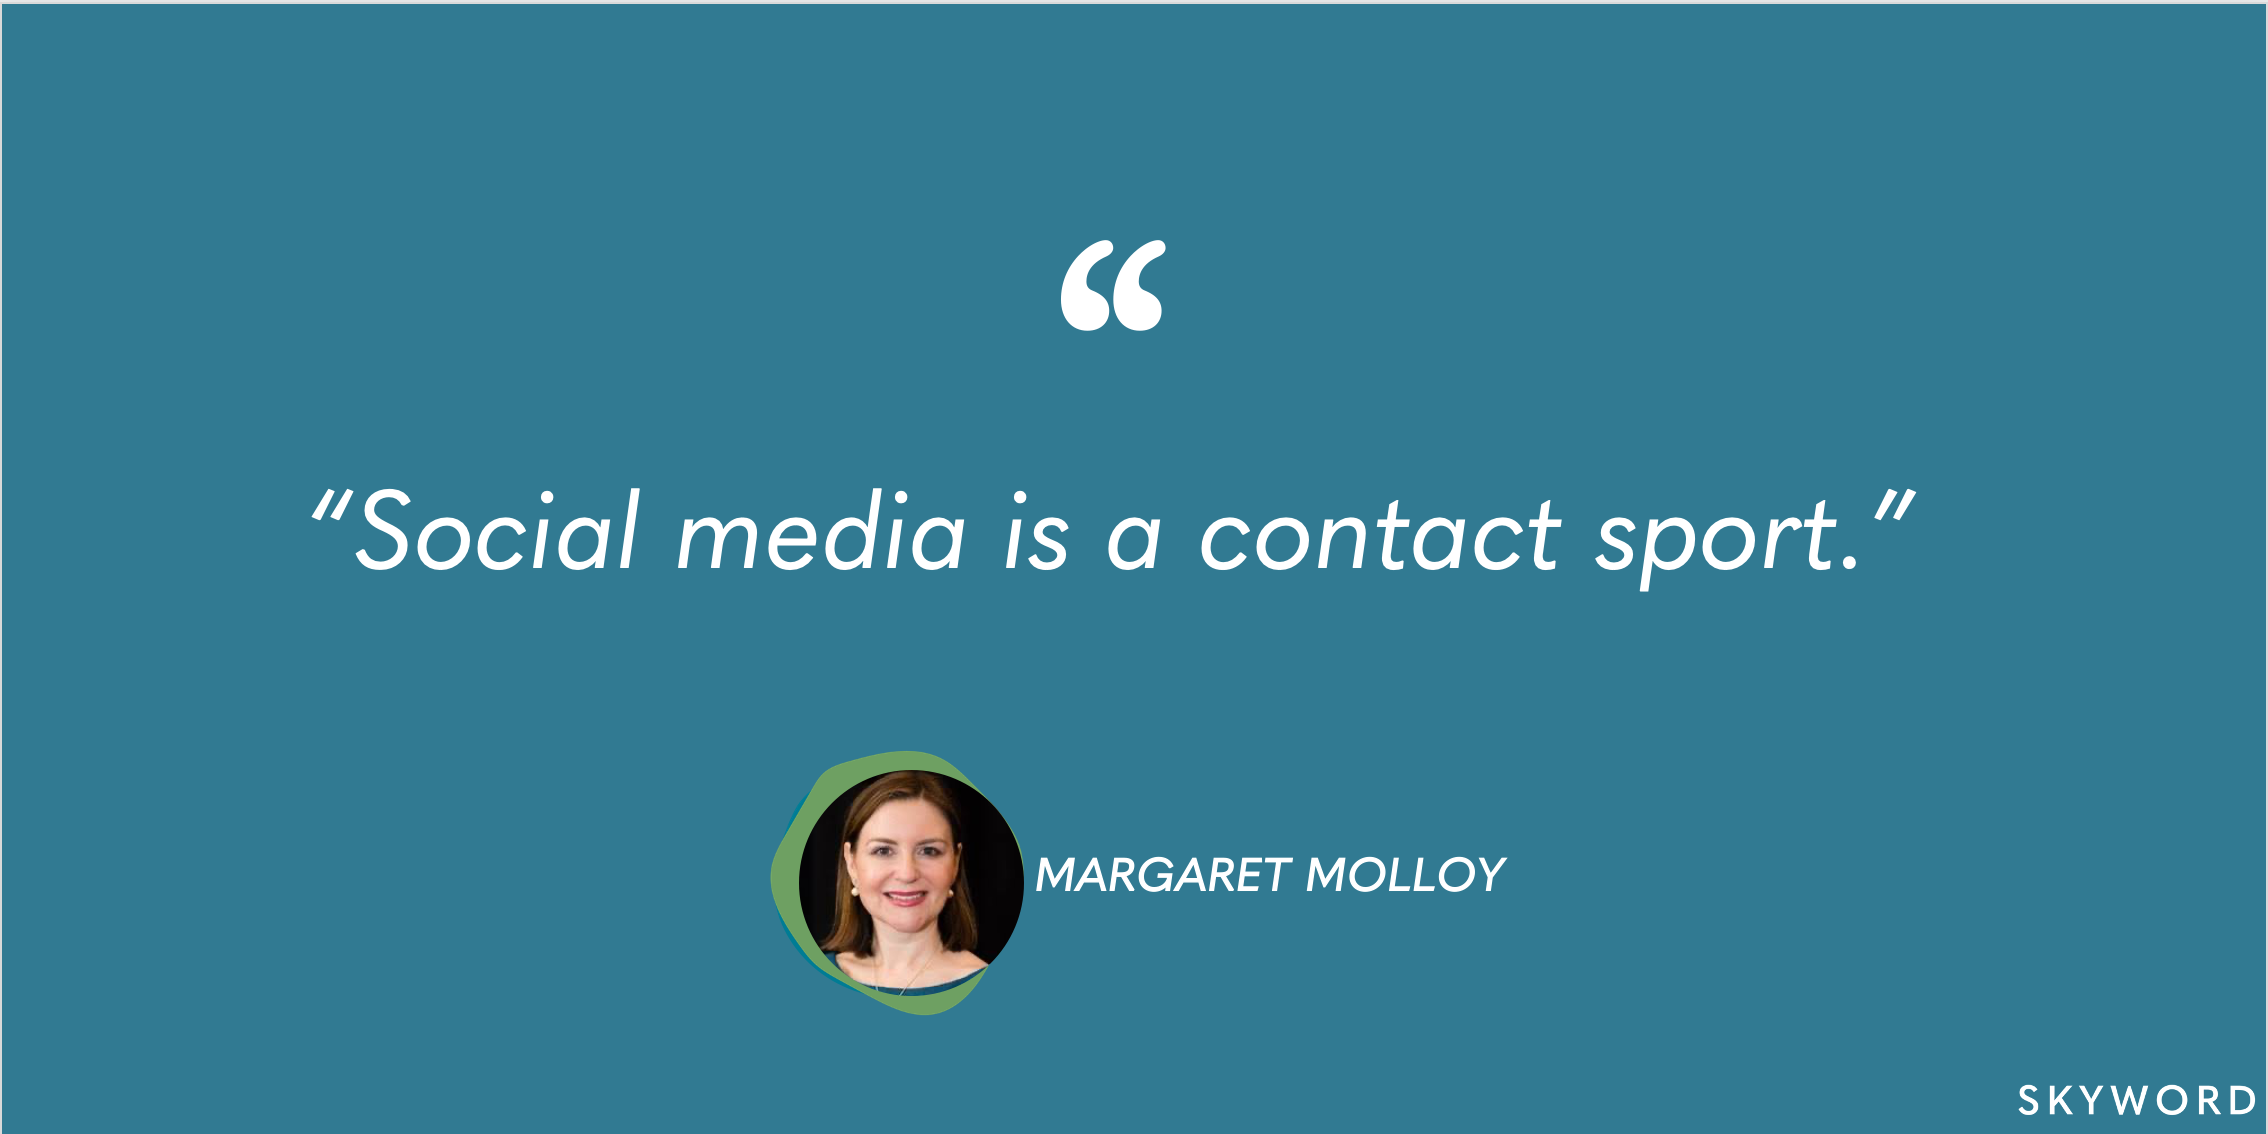 margaret molloy social media quote